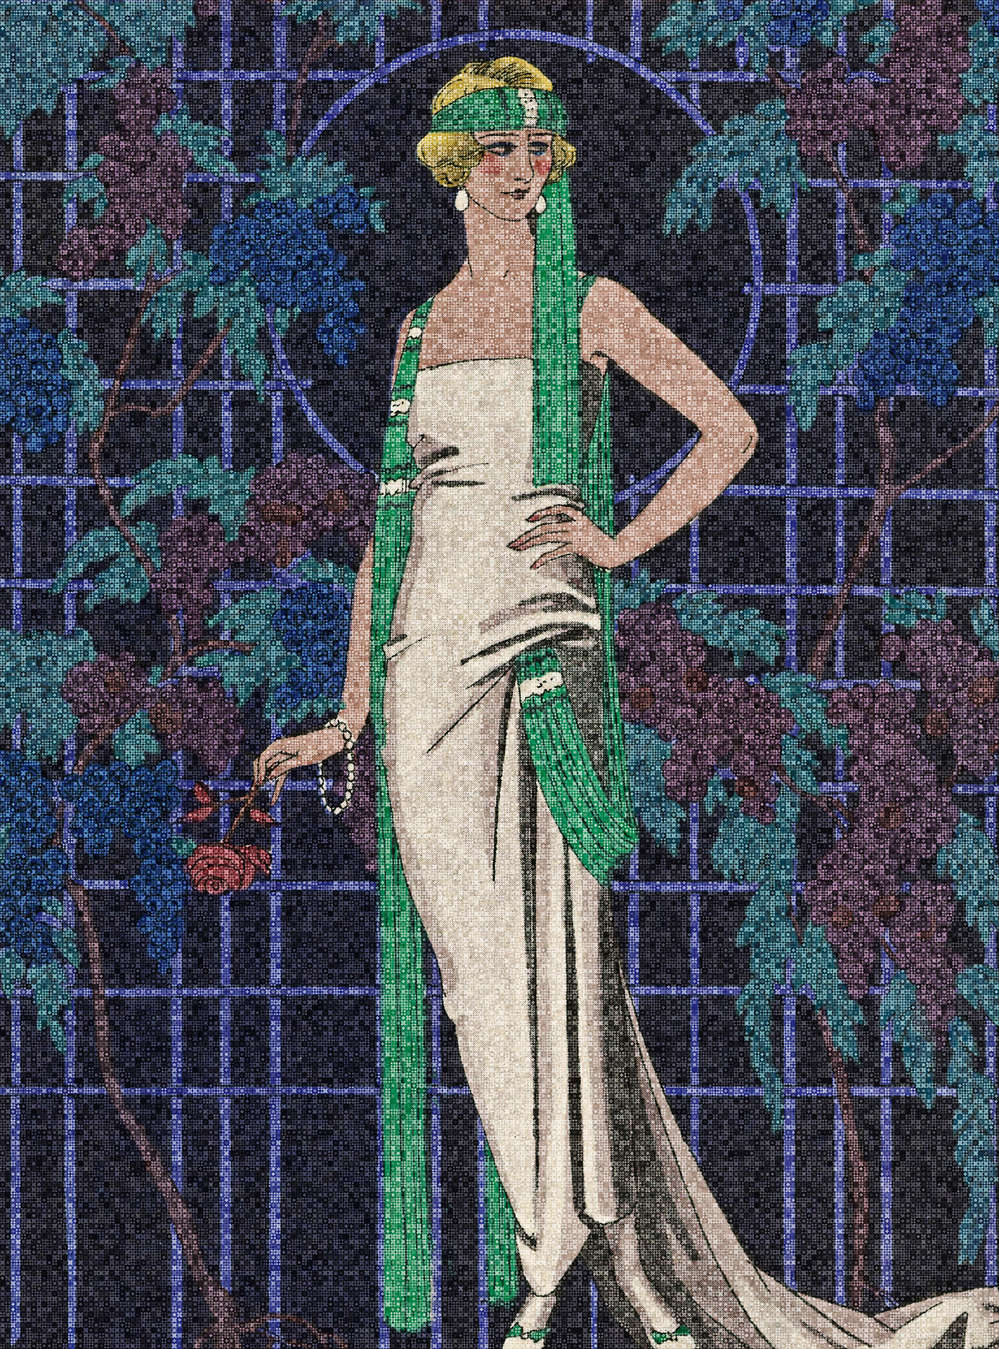             Scala 2 - Carta da parati a mosaico Art Deco Motivo donna stile anni '20
        